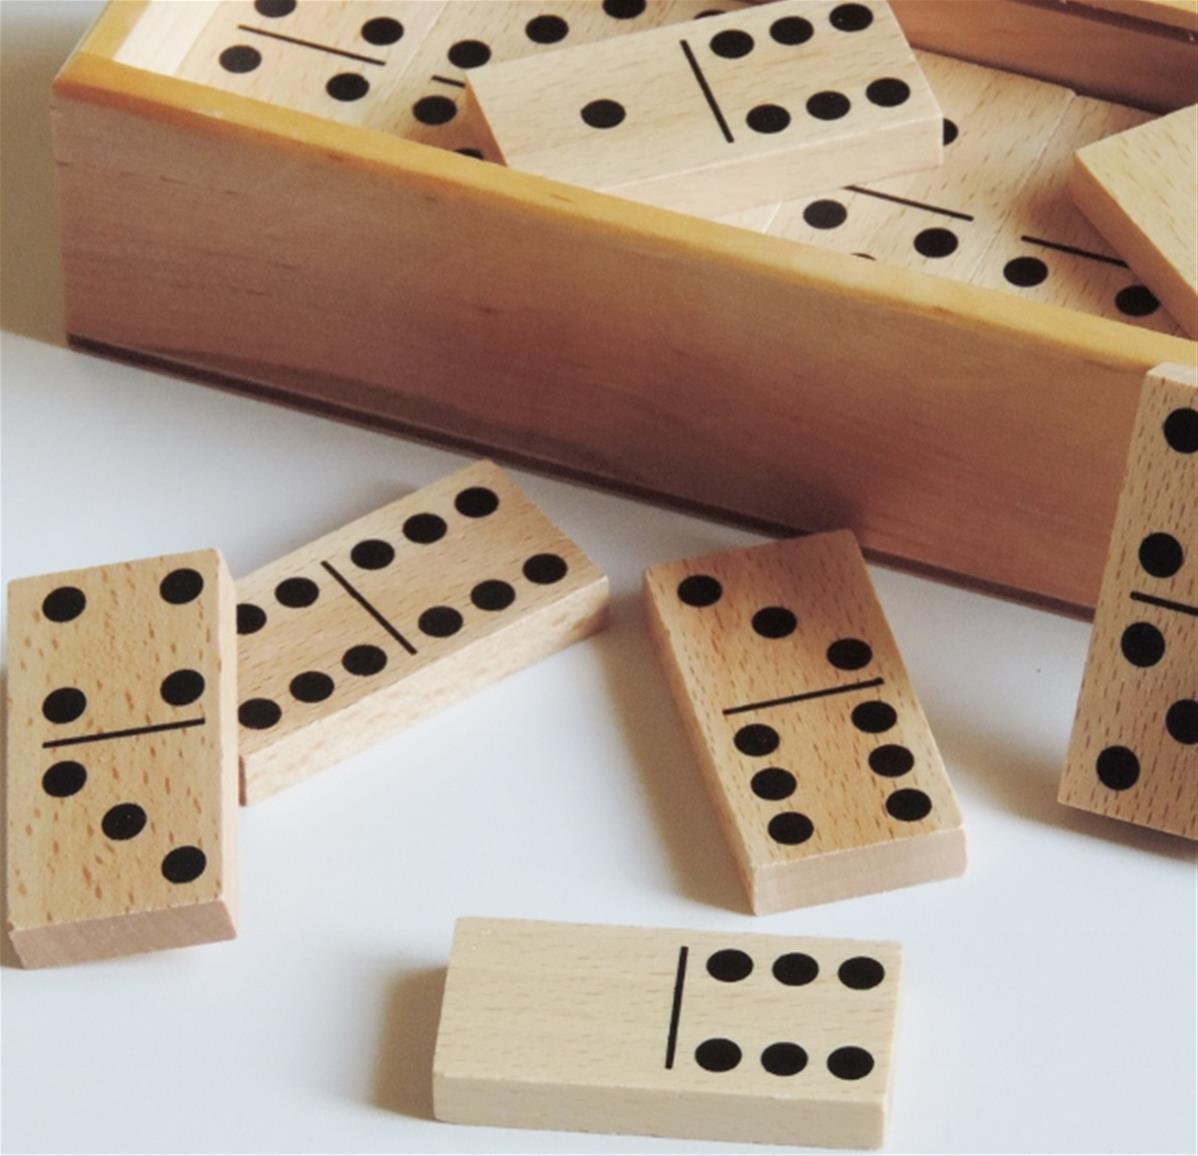 Jeu de dominos original en bois massif fabriqué en France